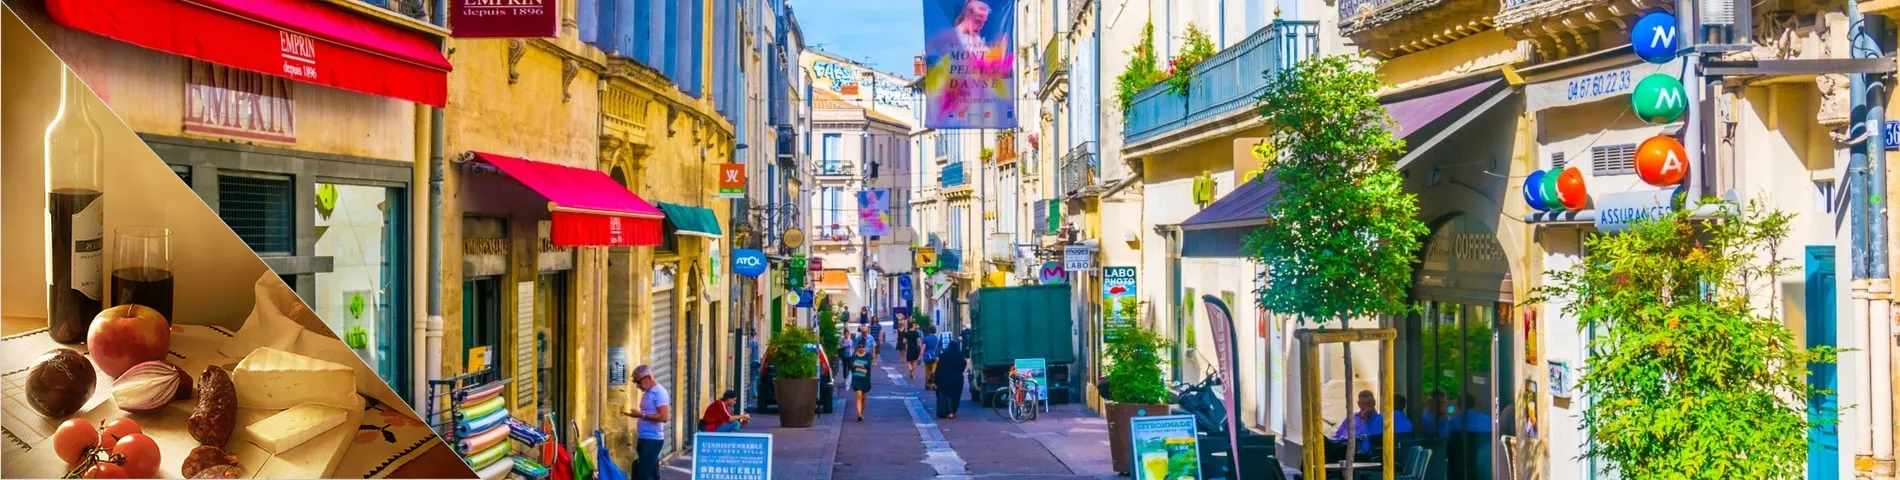 Montpellier - Frans & cultuur